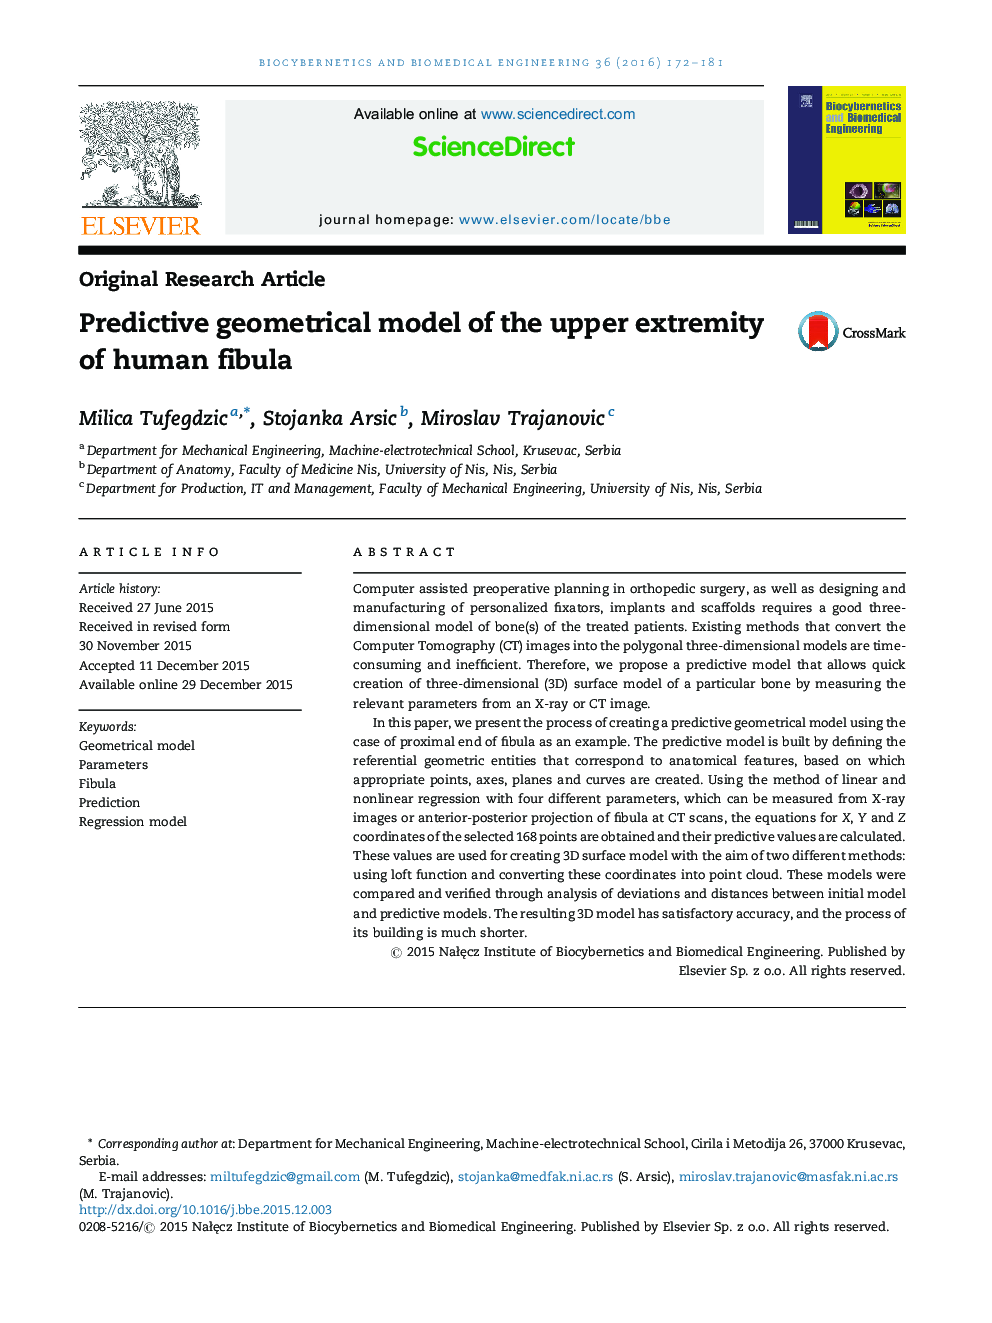 Predictive geometrical model of the upper extremity of human fibula